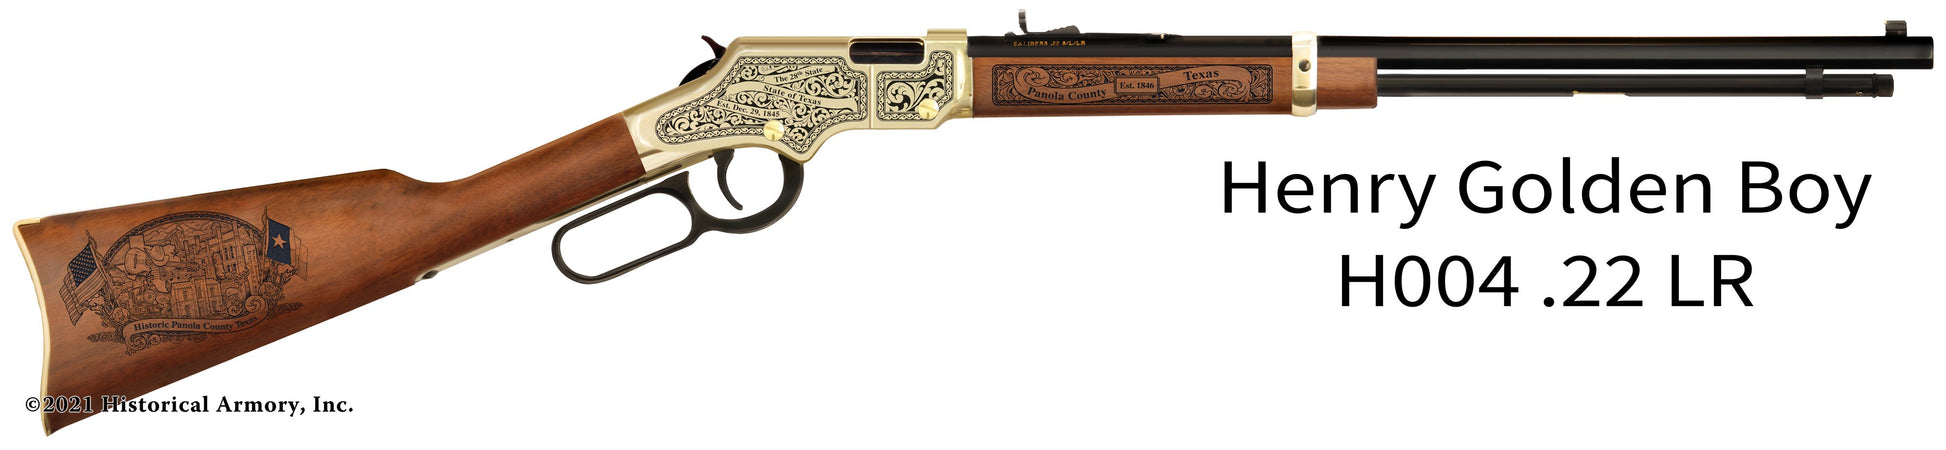 Panola County Texas Engraved Henry Golden Boy Rifle